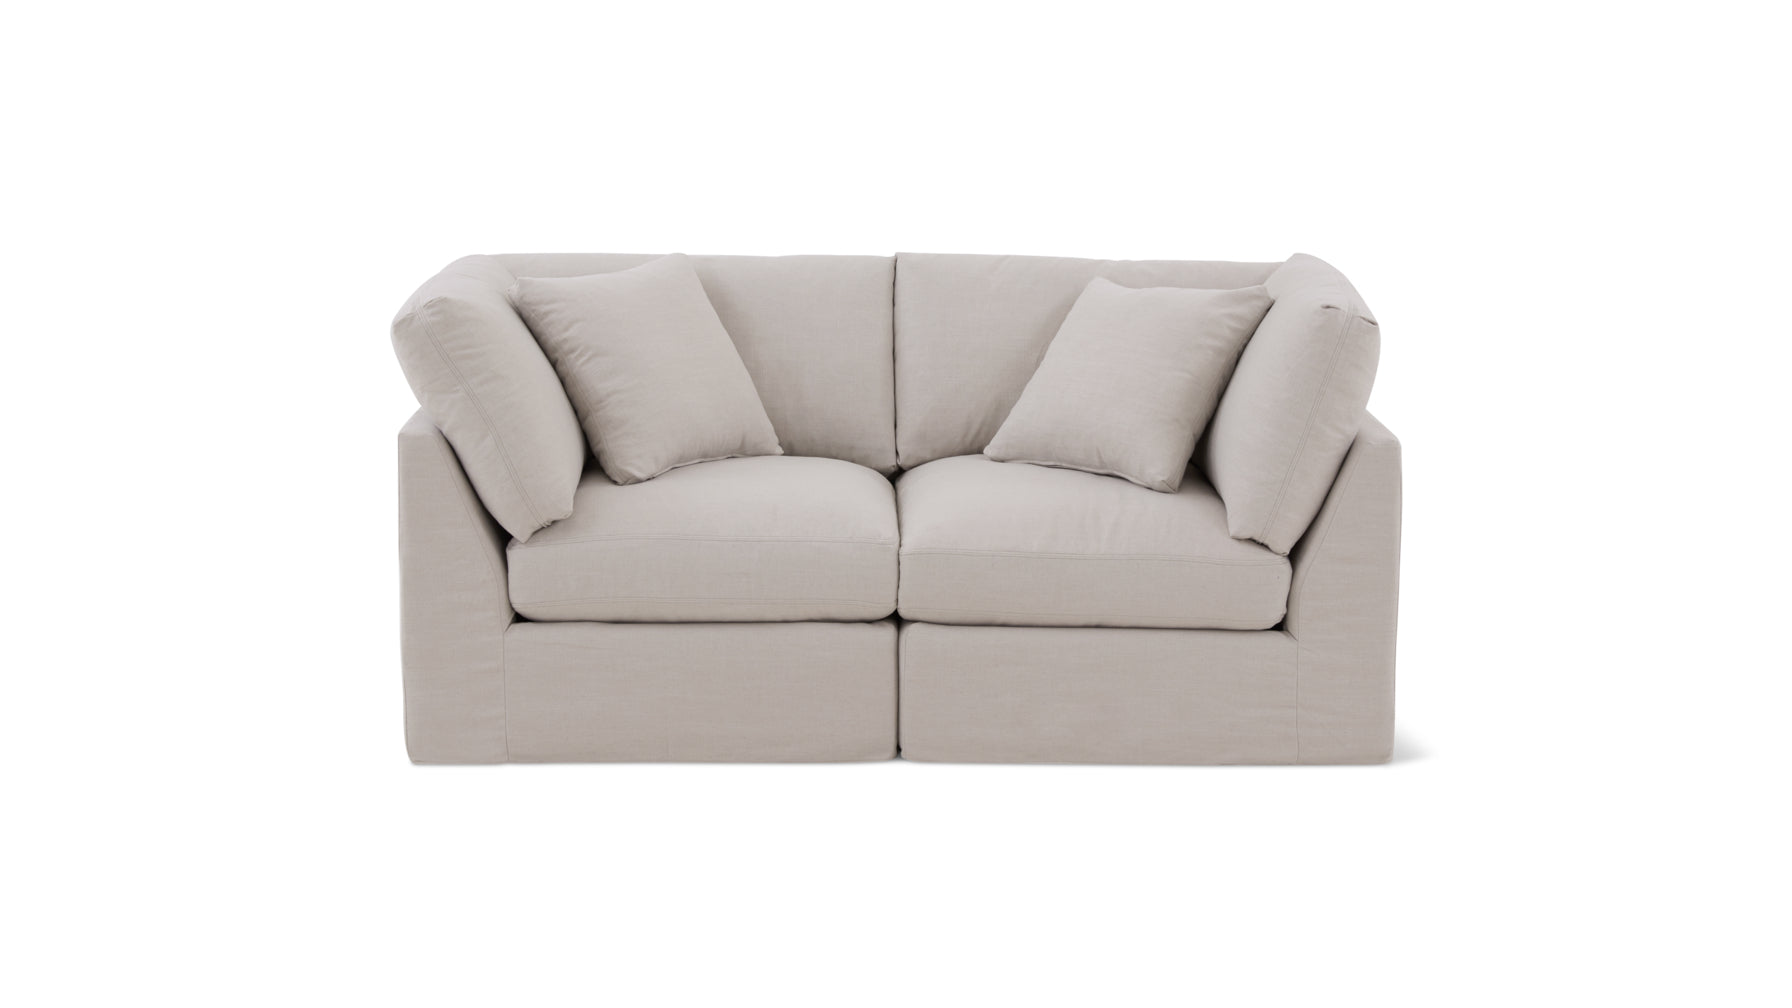 Get Together™ 2-Piece Modular Sofa, Standard, Clay - Image 1